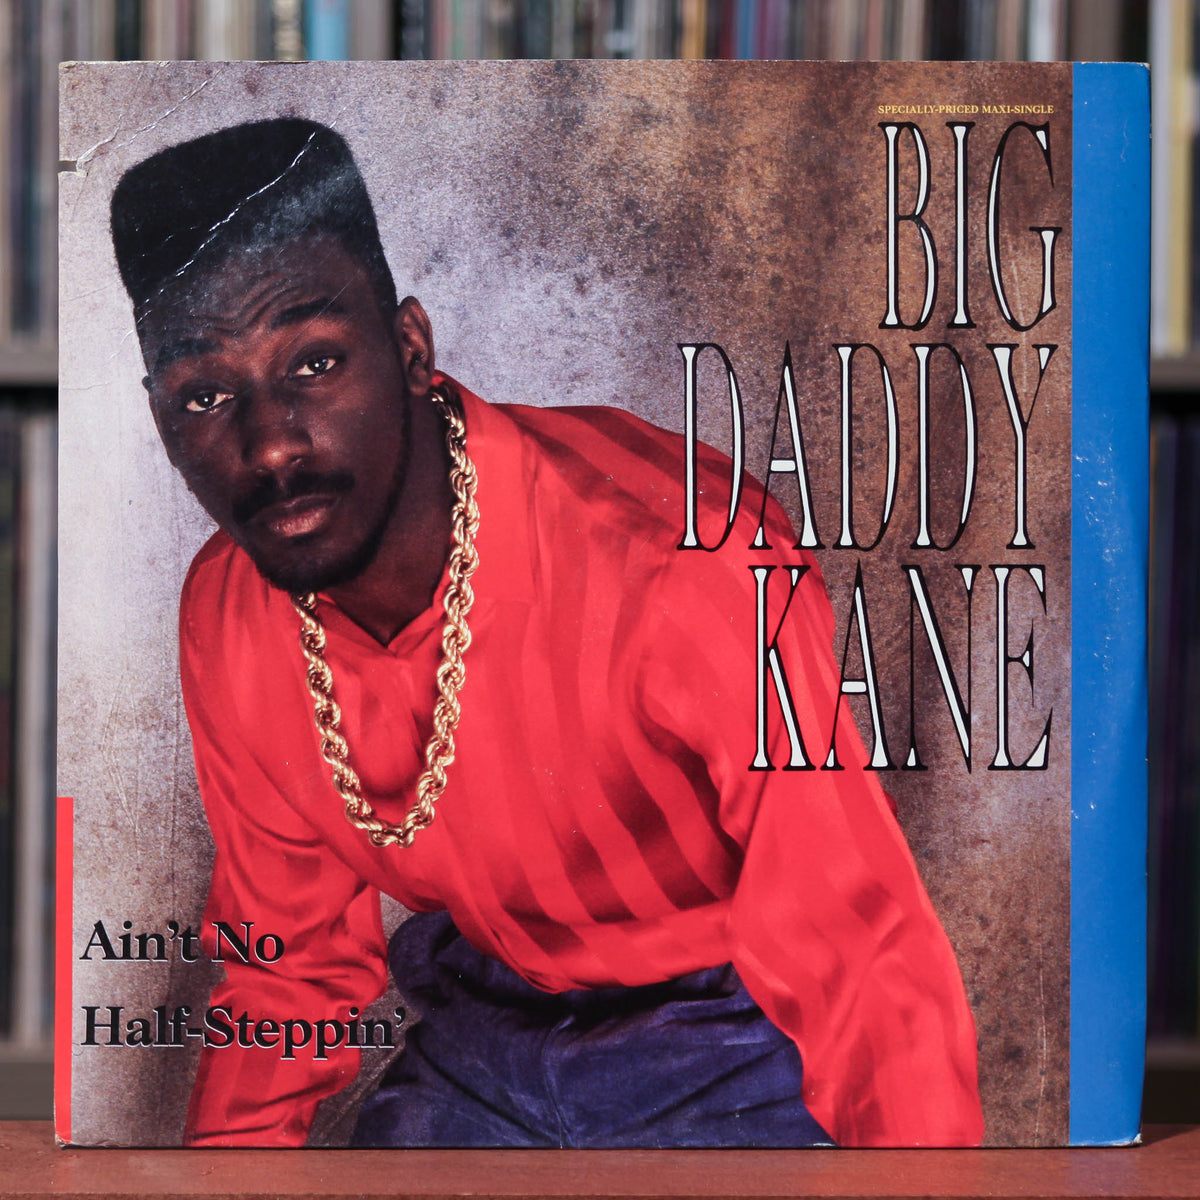 Big Daddy Kane - Ain't No Half-Steppin' - 12